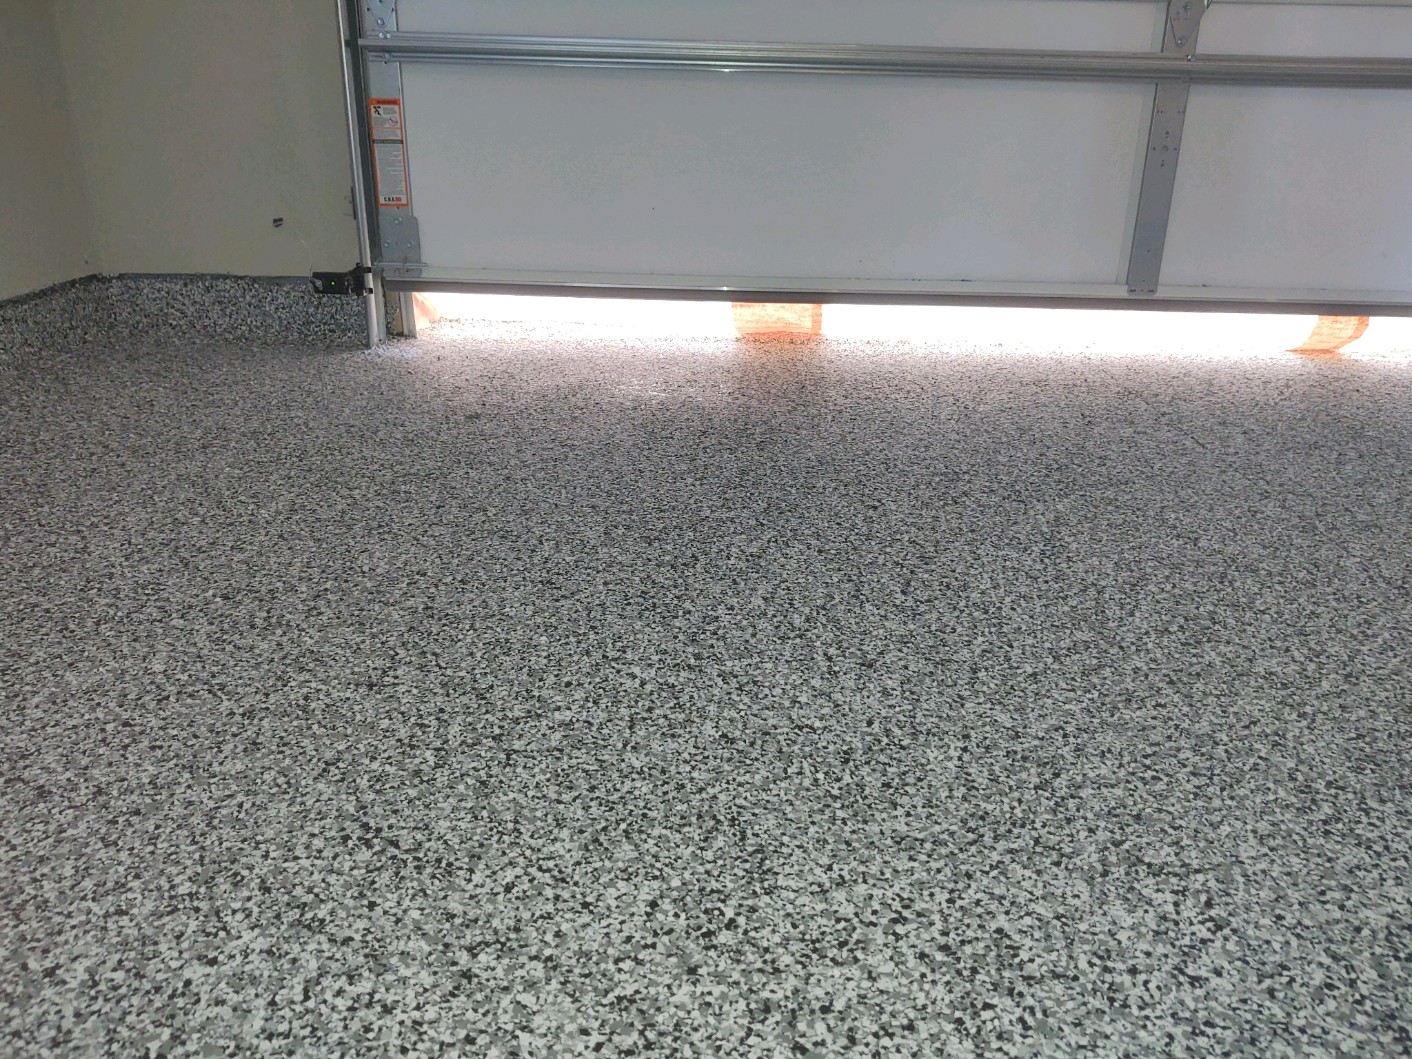 Completed polyurea floor application in Boise